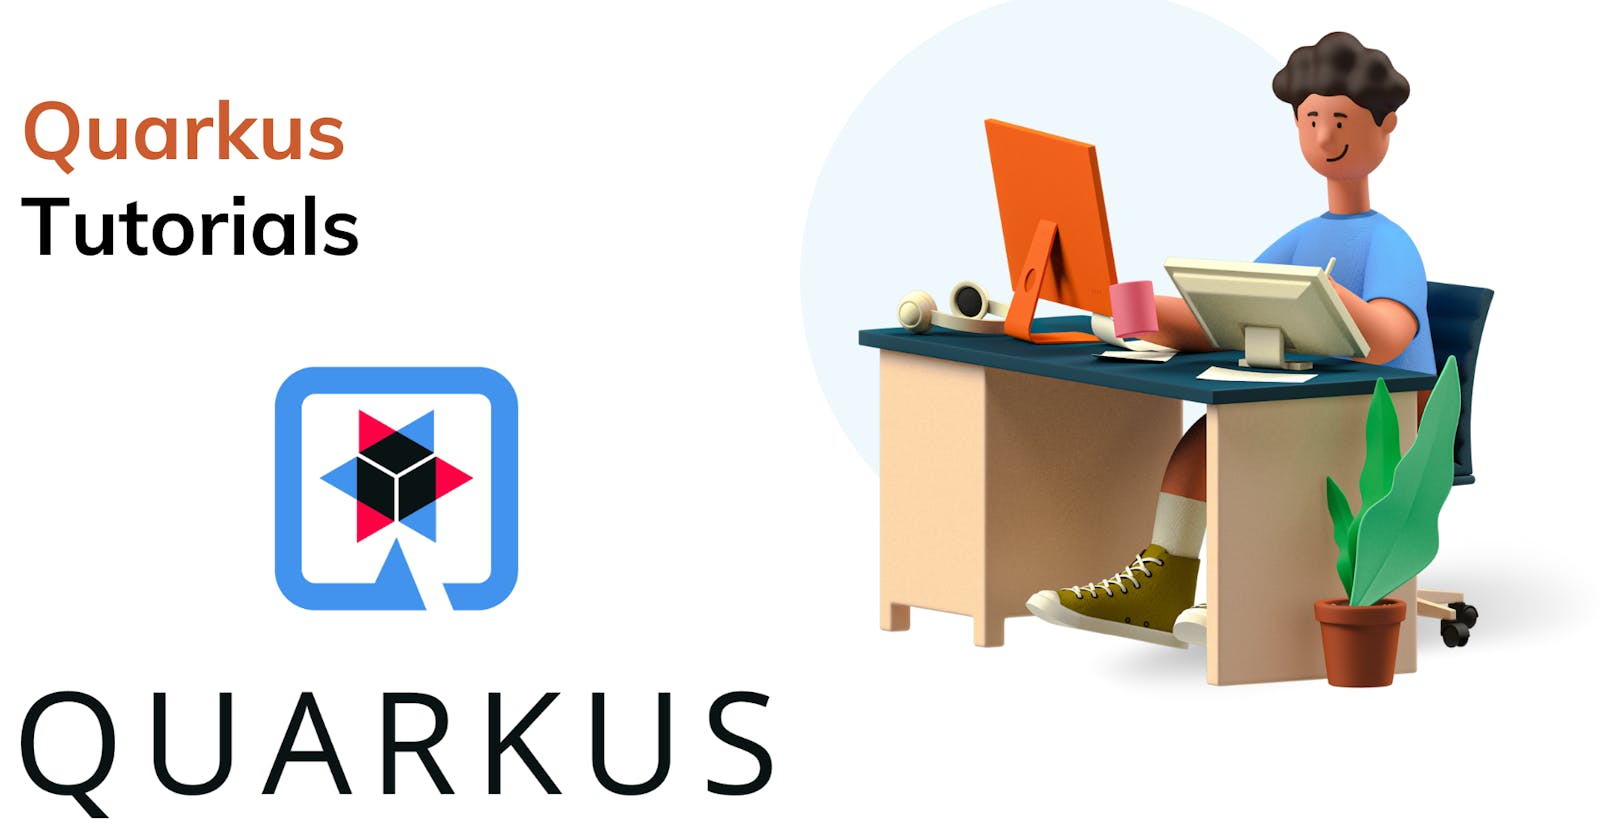 Quarkus - Hello world example using Kotlin!